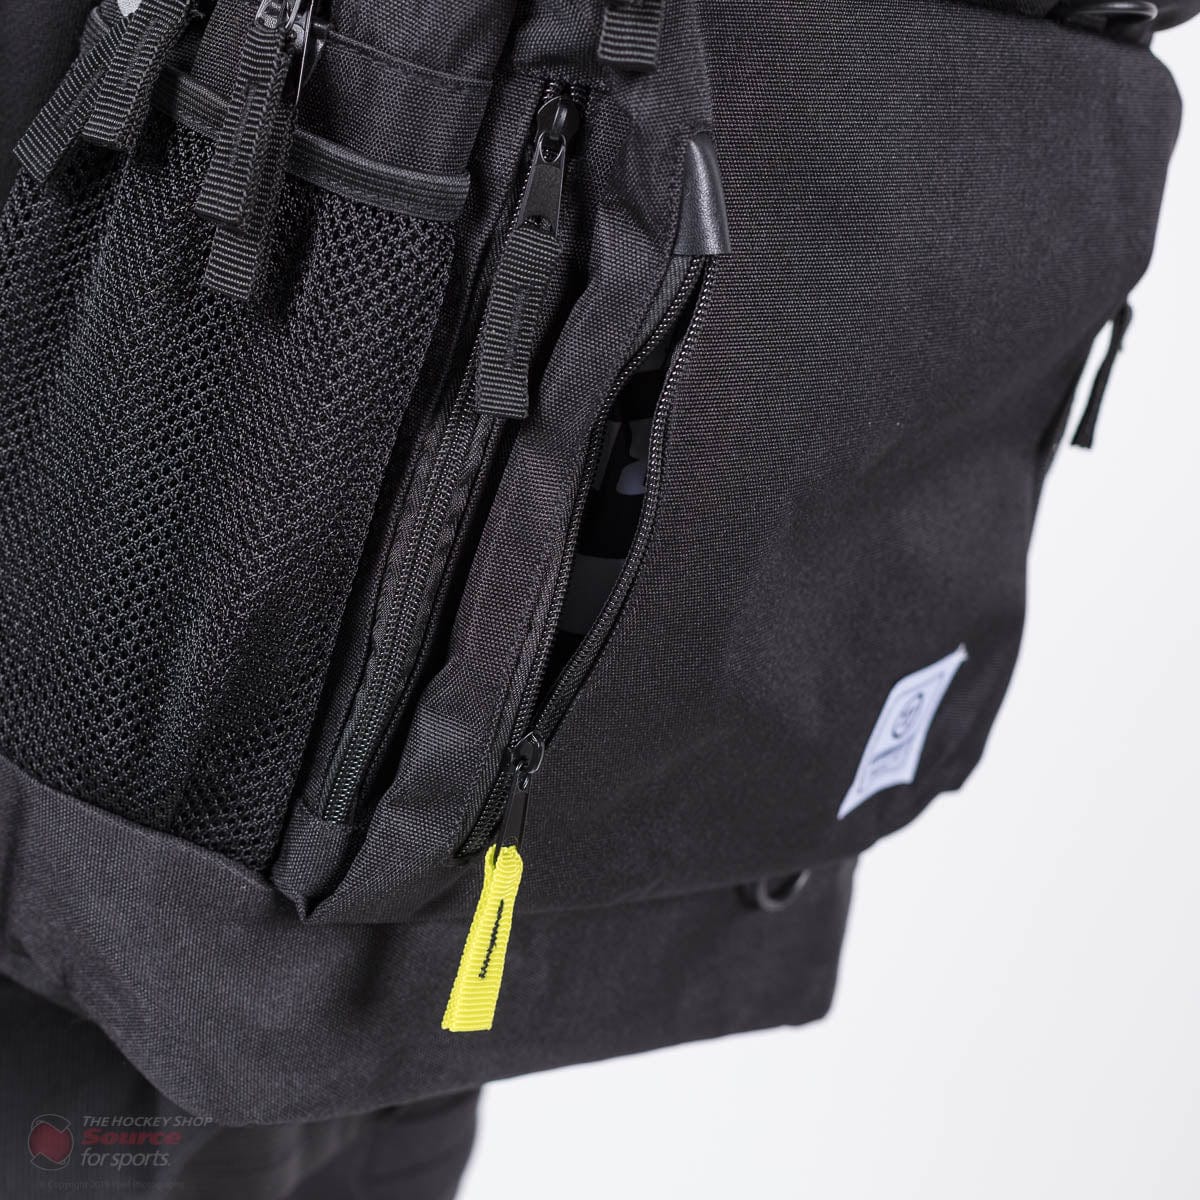 Warrior Q10 Backpack